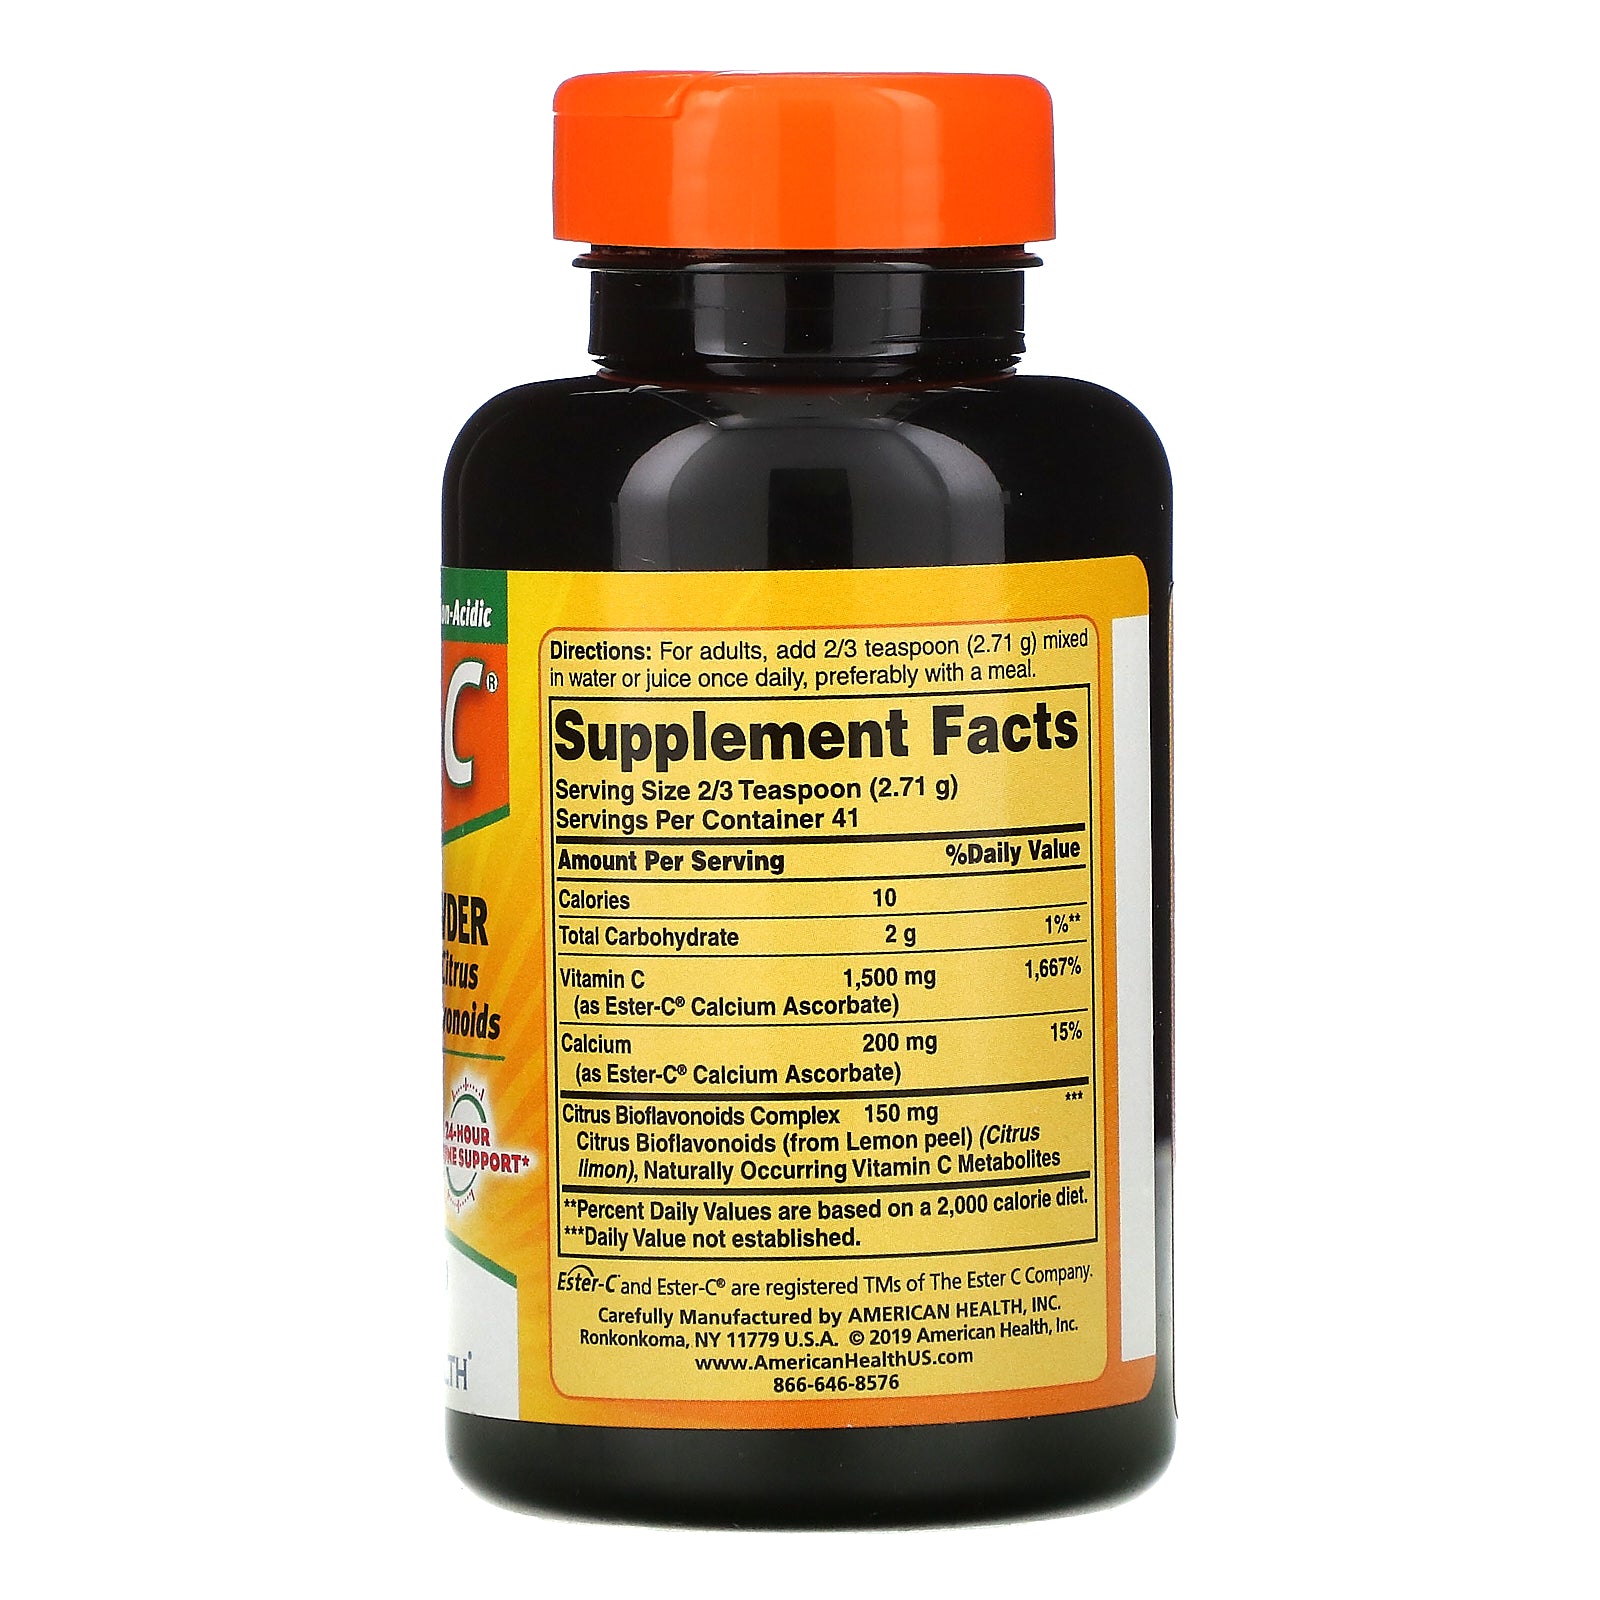 American Health, Ester-C, Powder with Citrus Bioflavonoids, 4 oz (113.4 g)